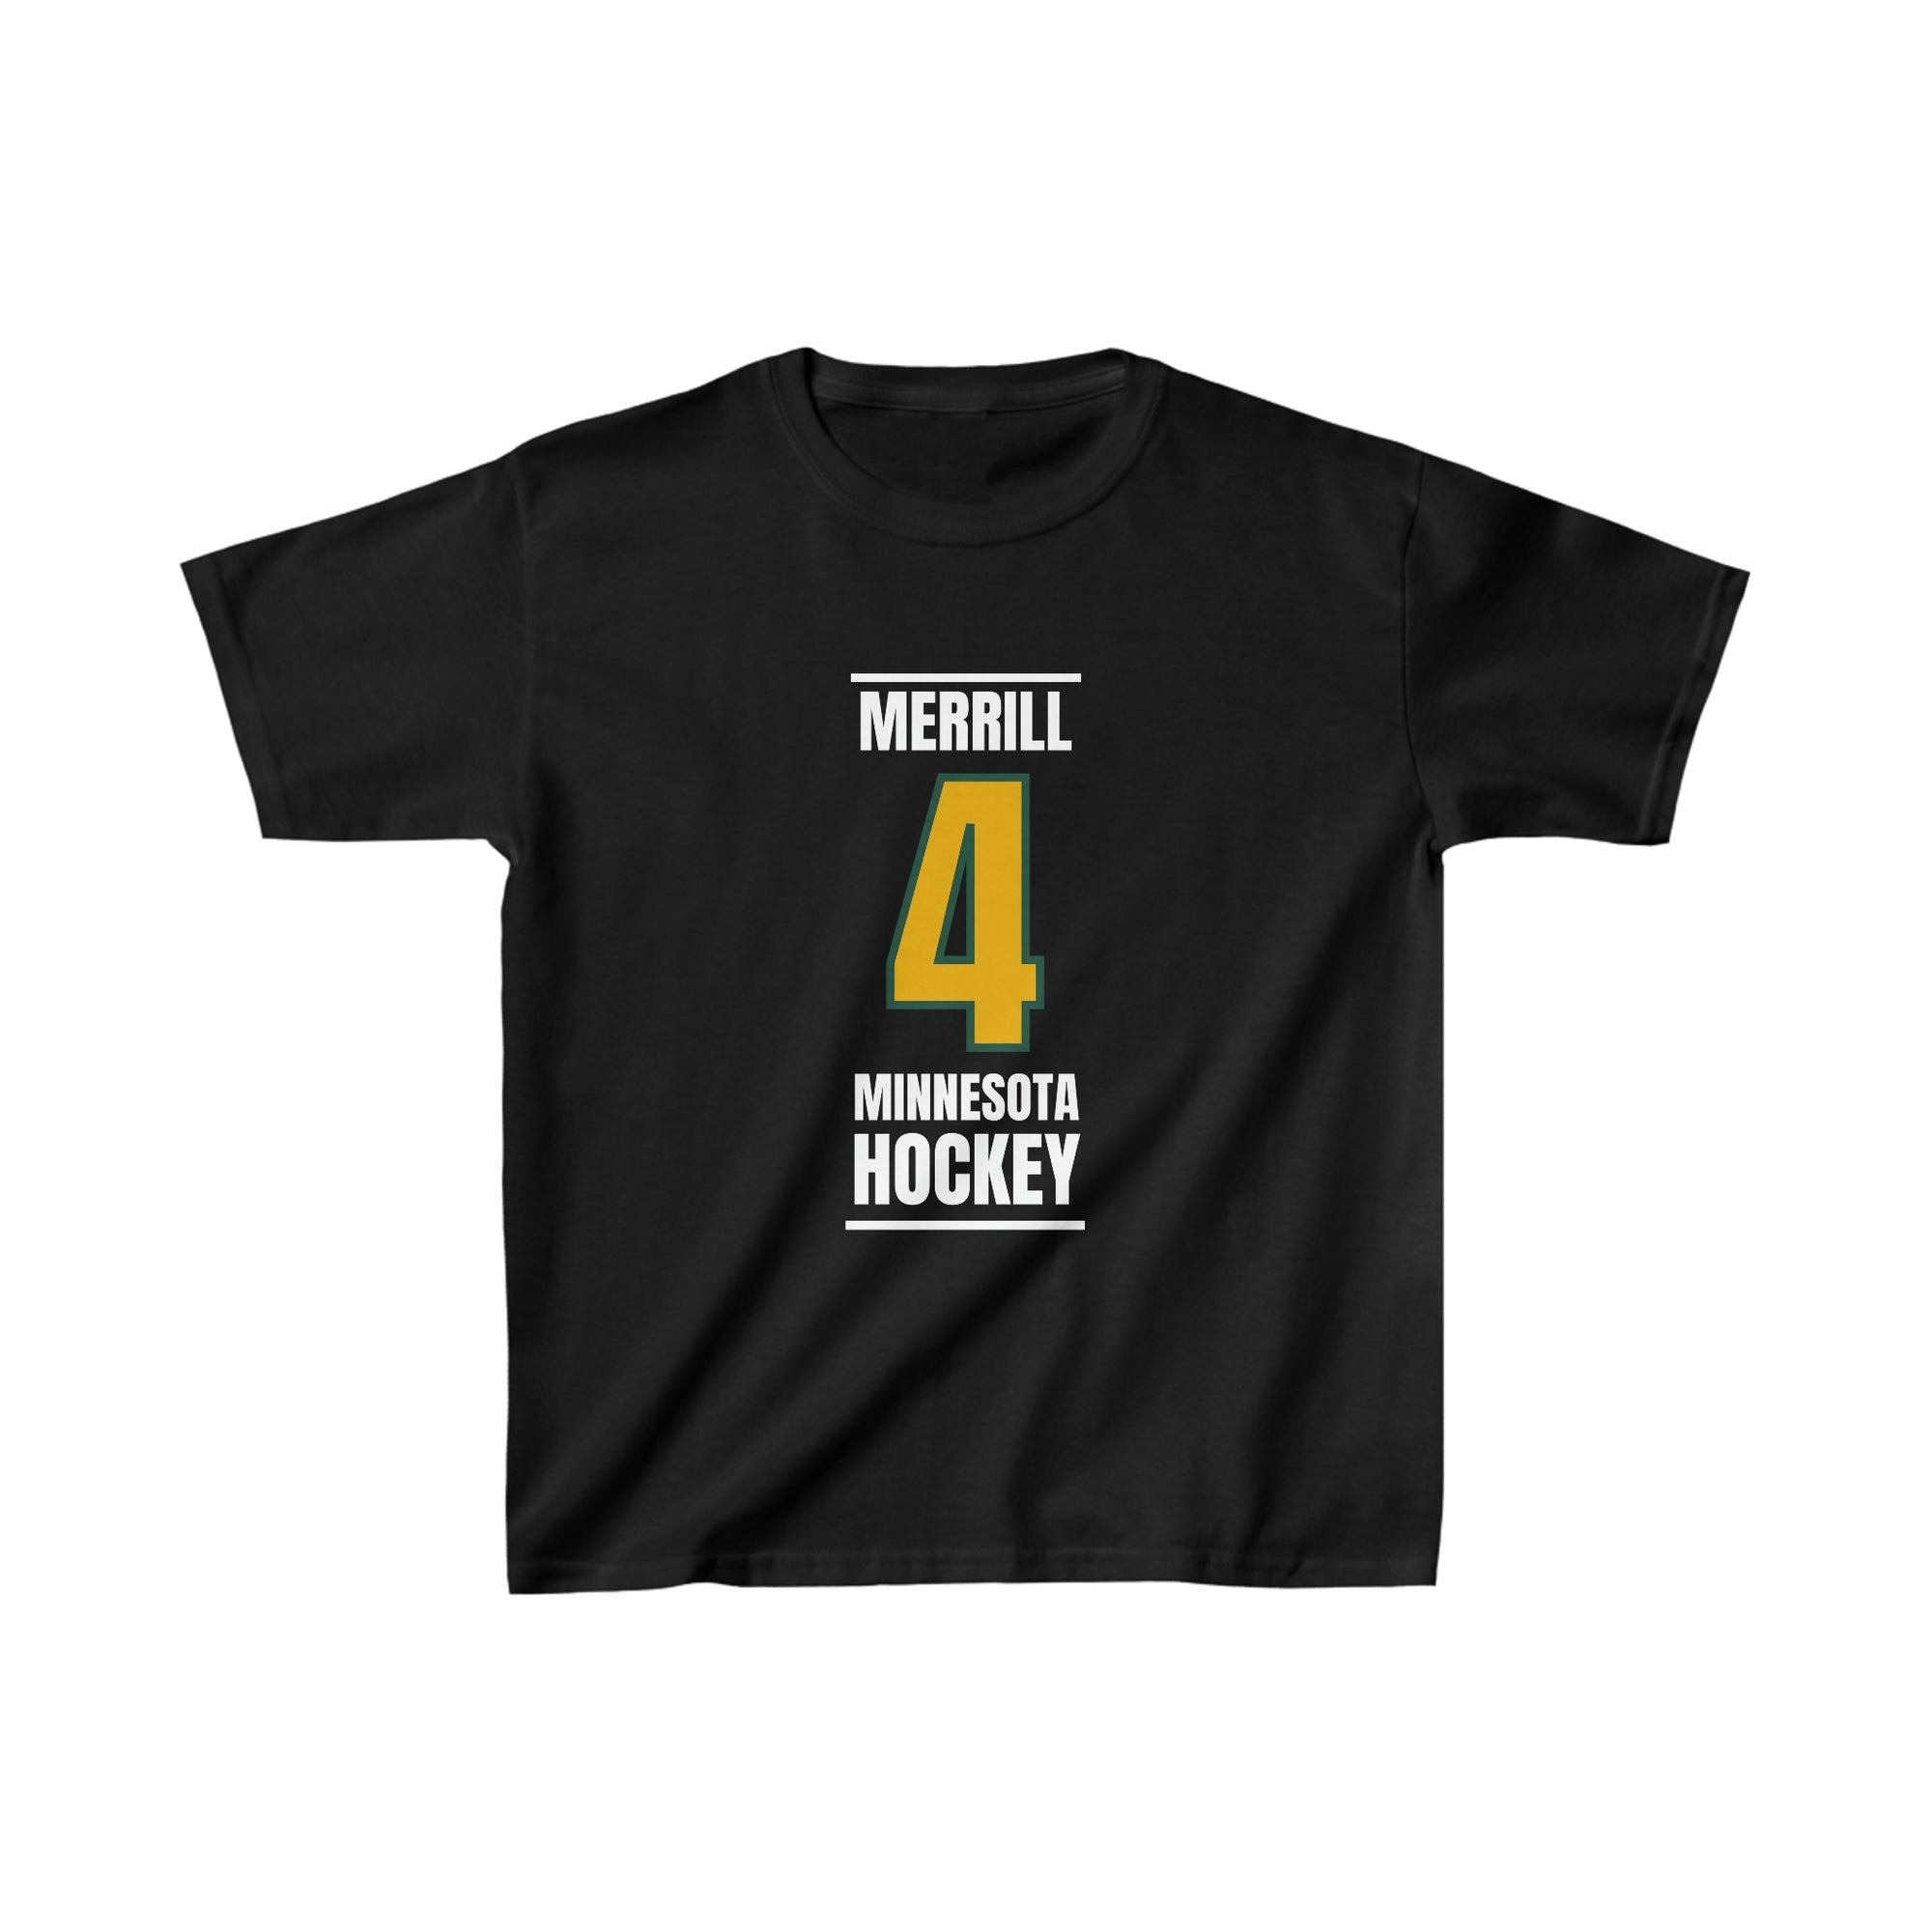 Merrill 4 Minnesota Hockey Gold Vertical Design Kids Tee